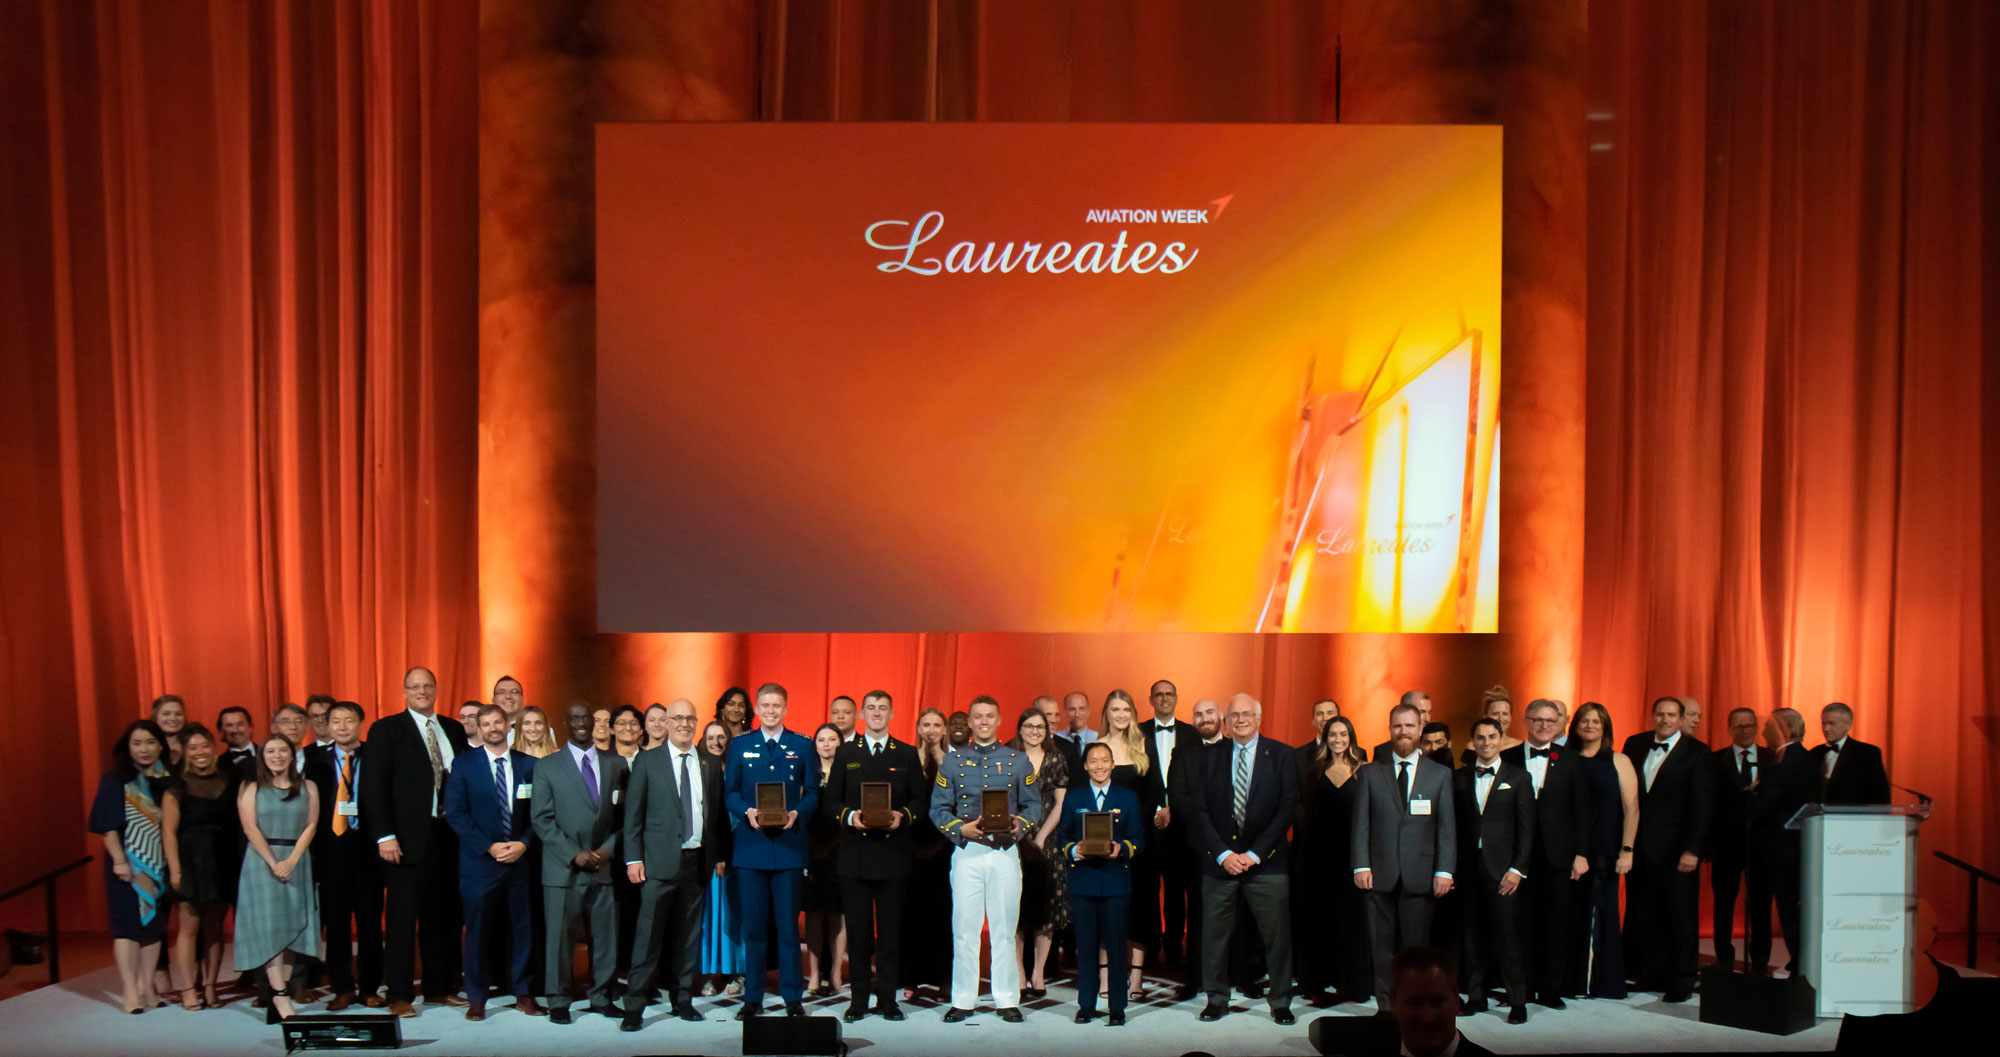 Aviation Week Network's Laureate Awards